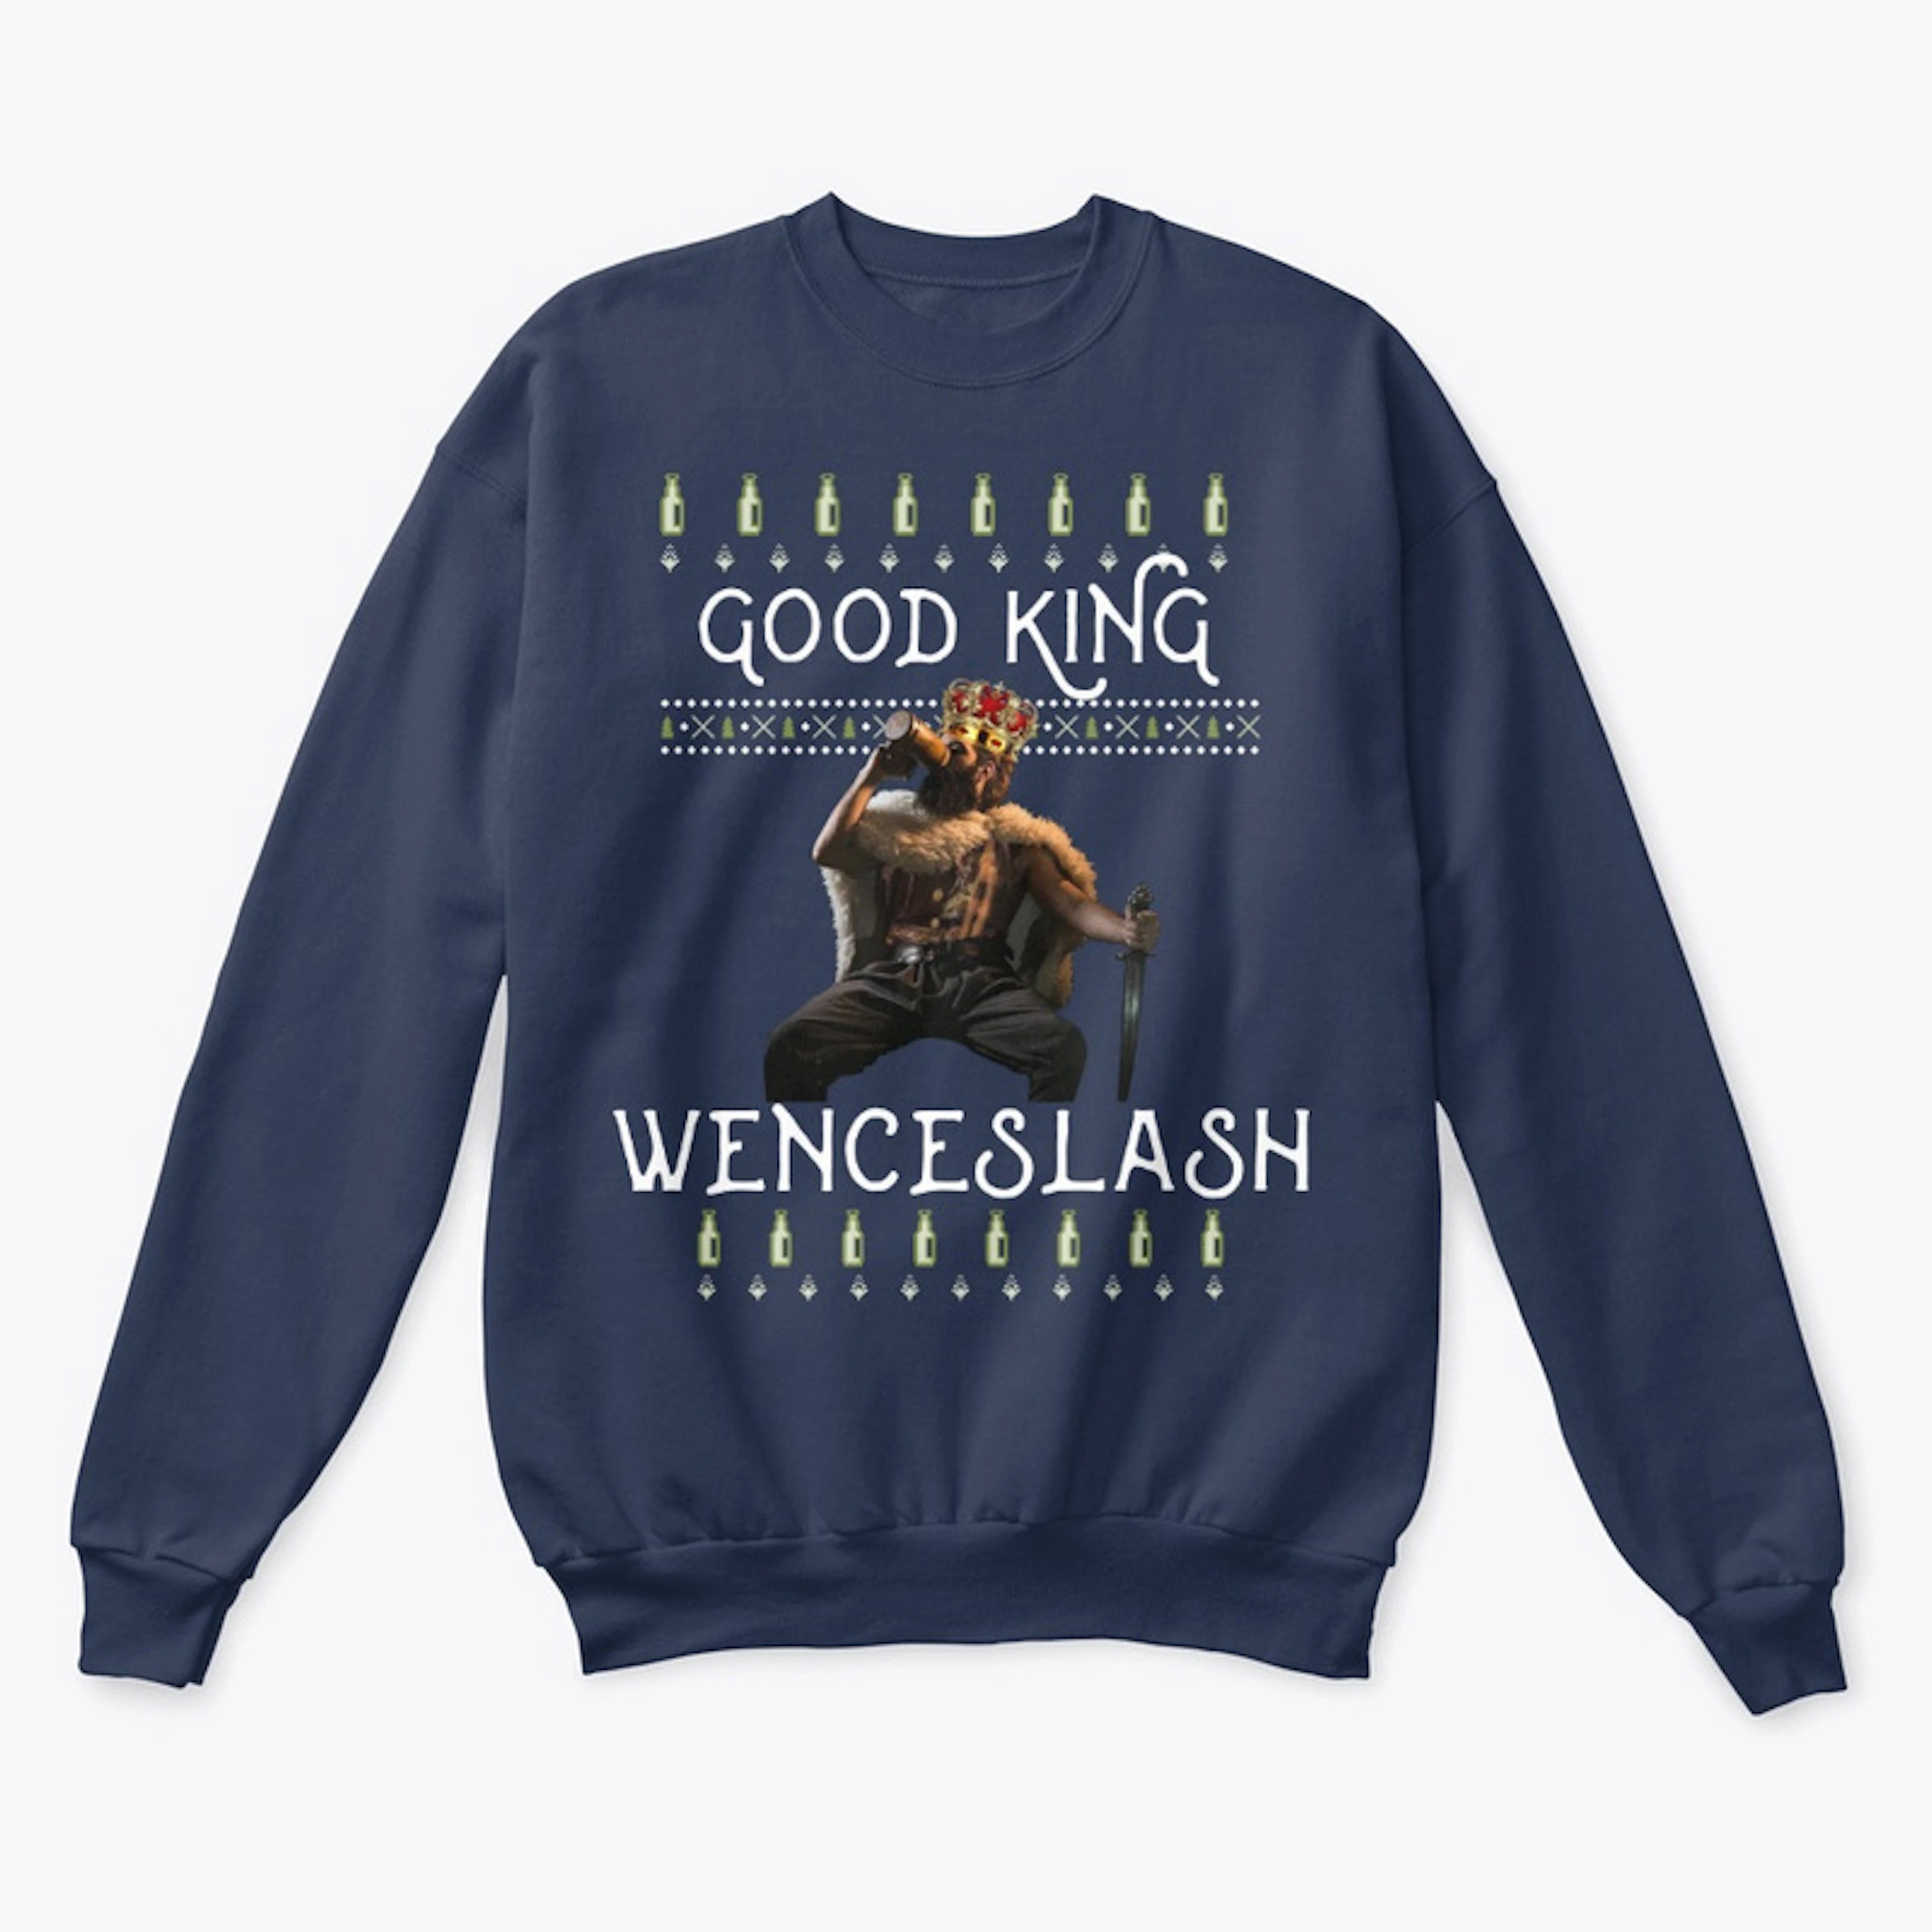 Good King Wenceslash